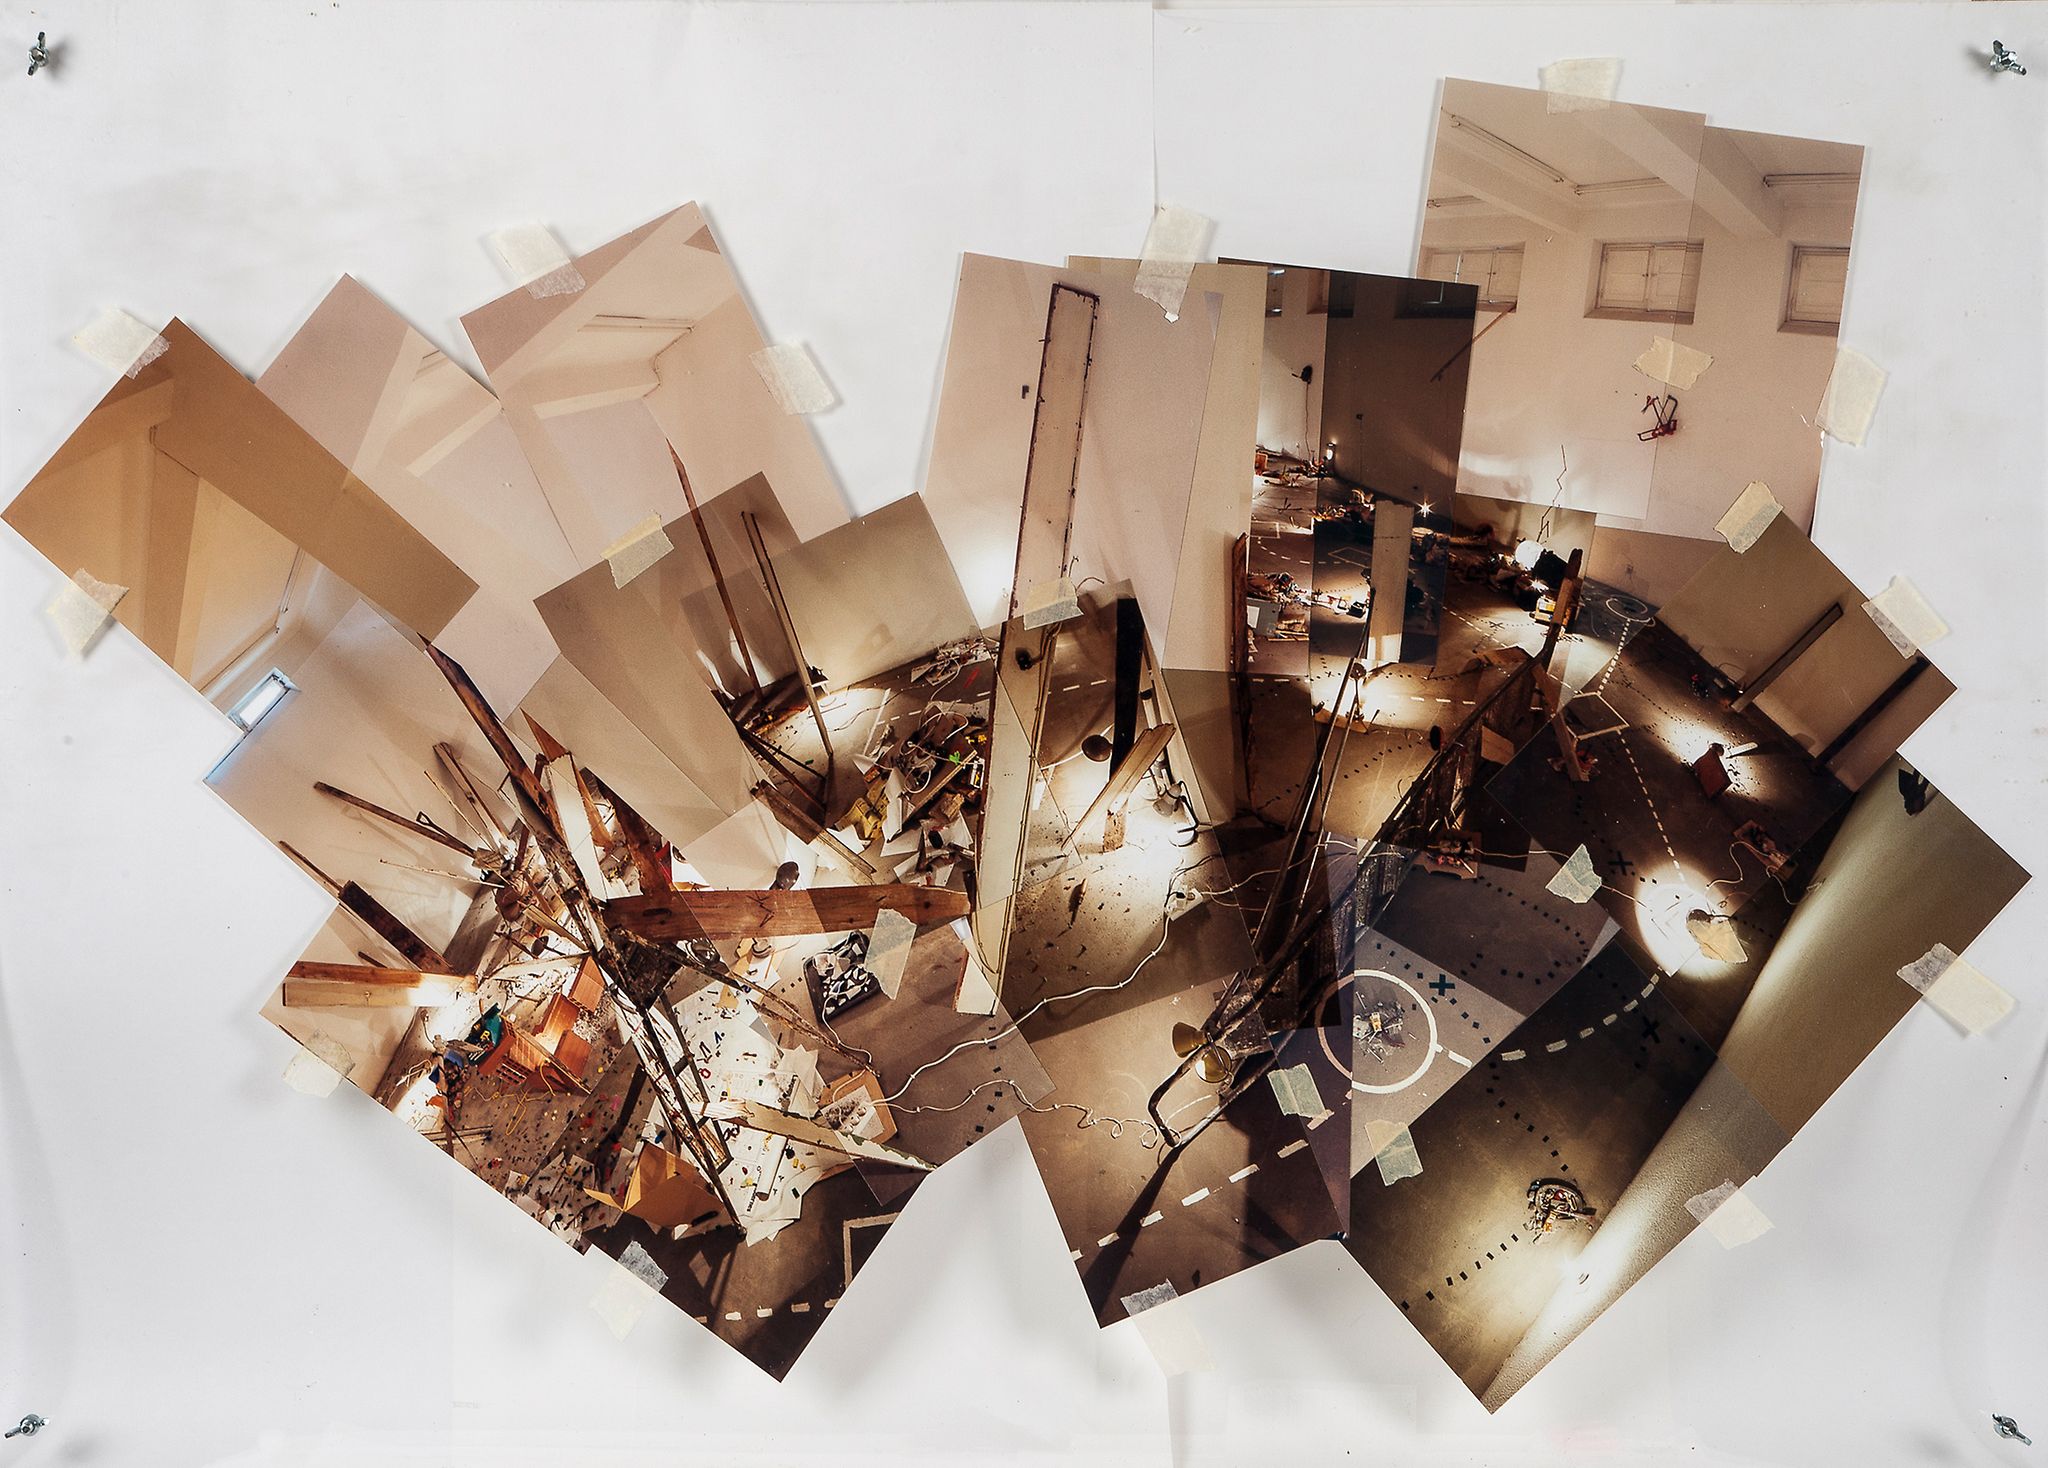 Tomoko Takahashi (b.1966) - Table Piece (How it was like) photo collage on Kodak photo paper taped